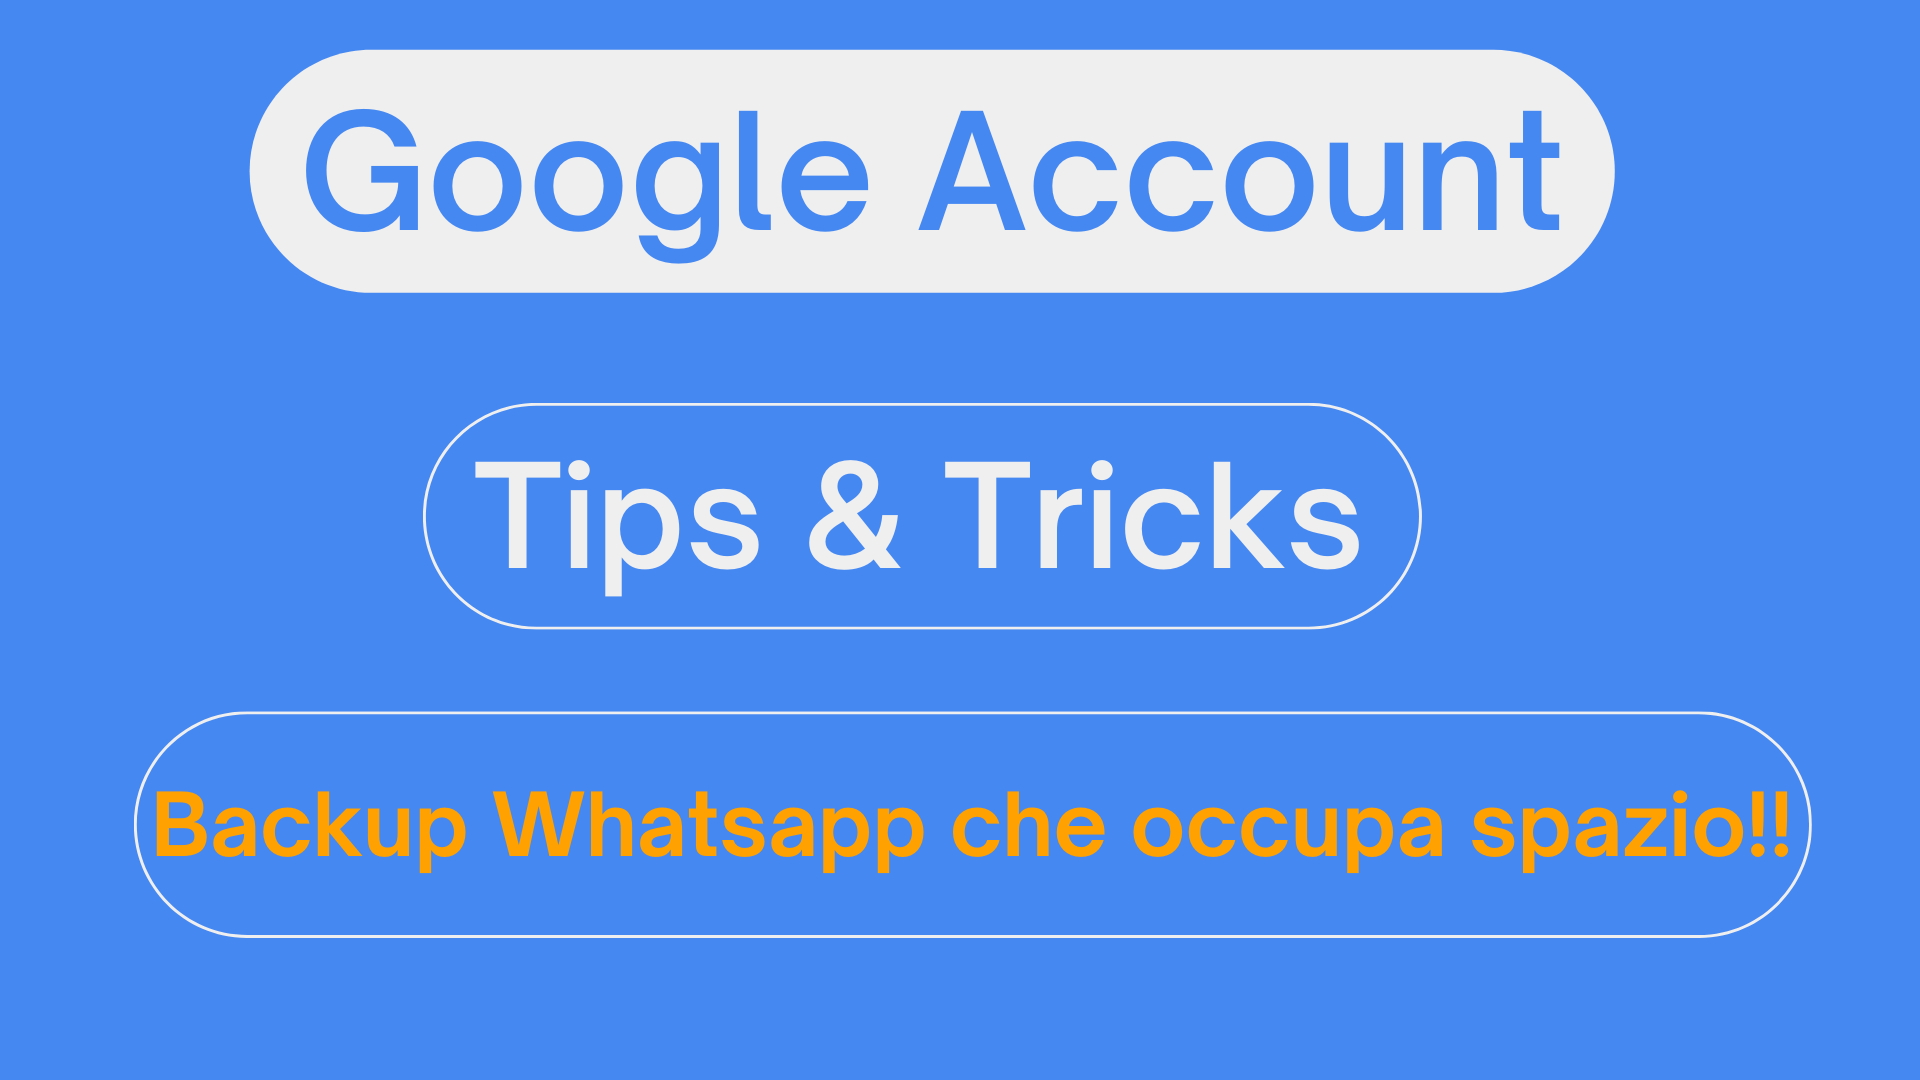 account google elimina backup whatsapp